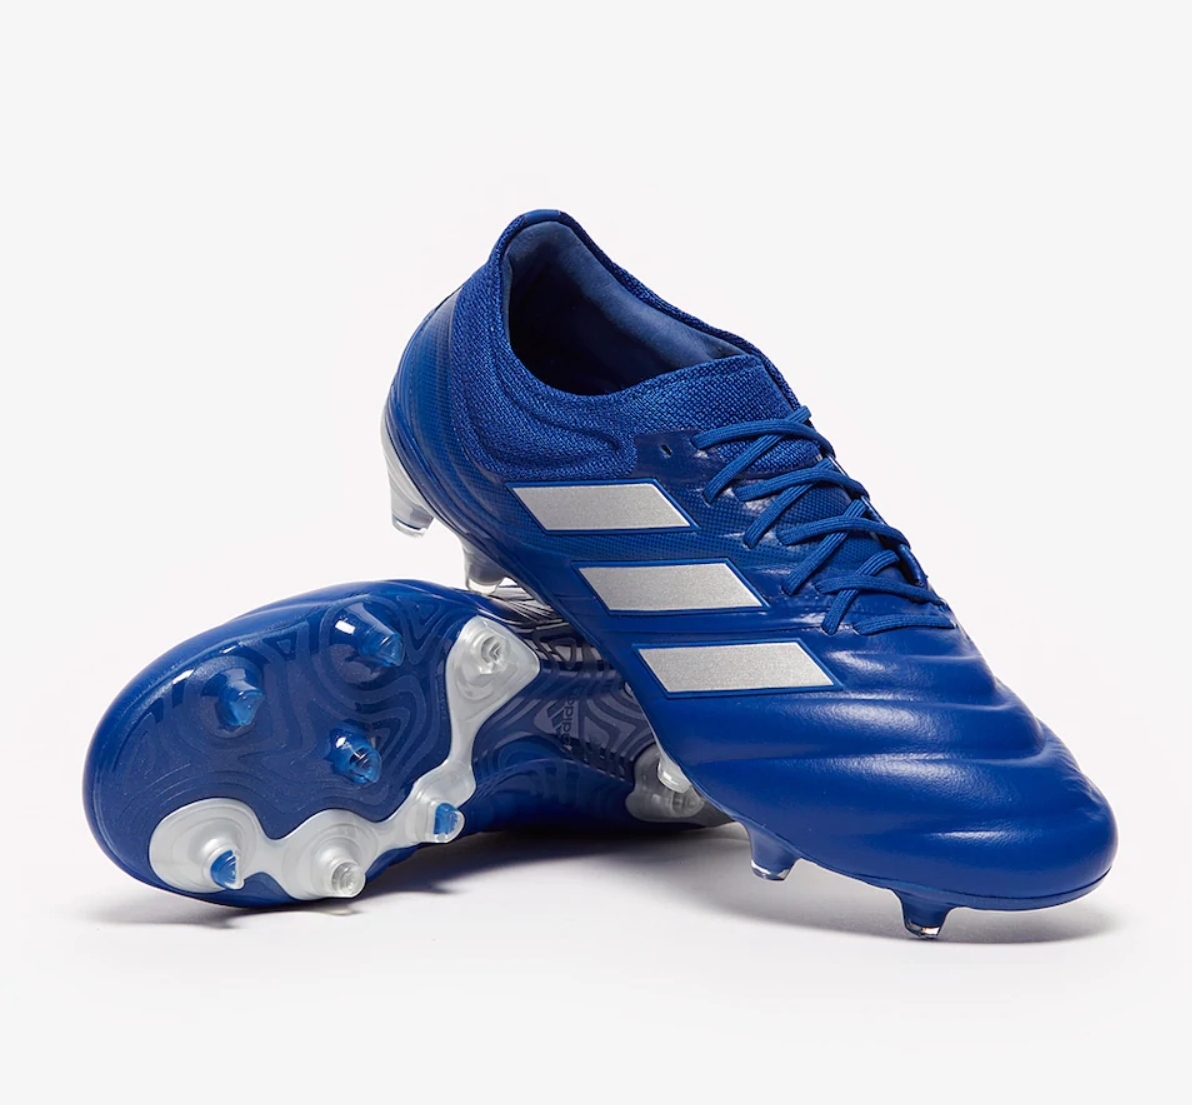 Declan Rice wearing Adidas Copa 20.1 football boots